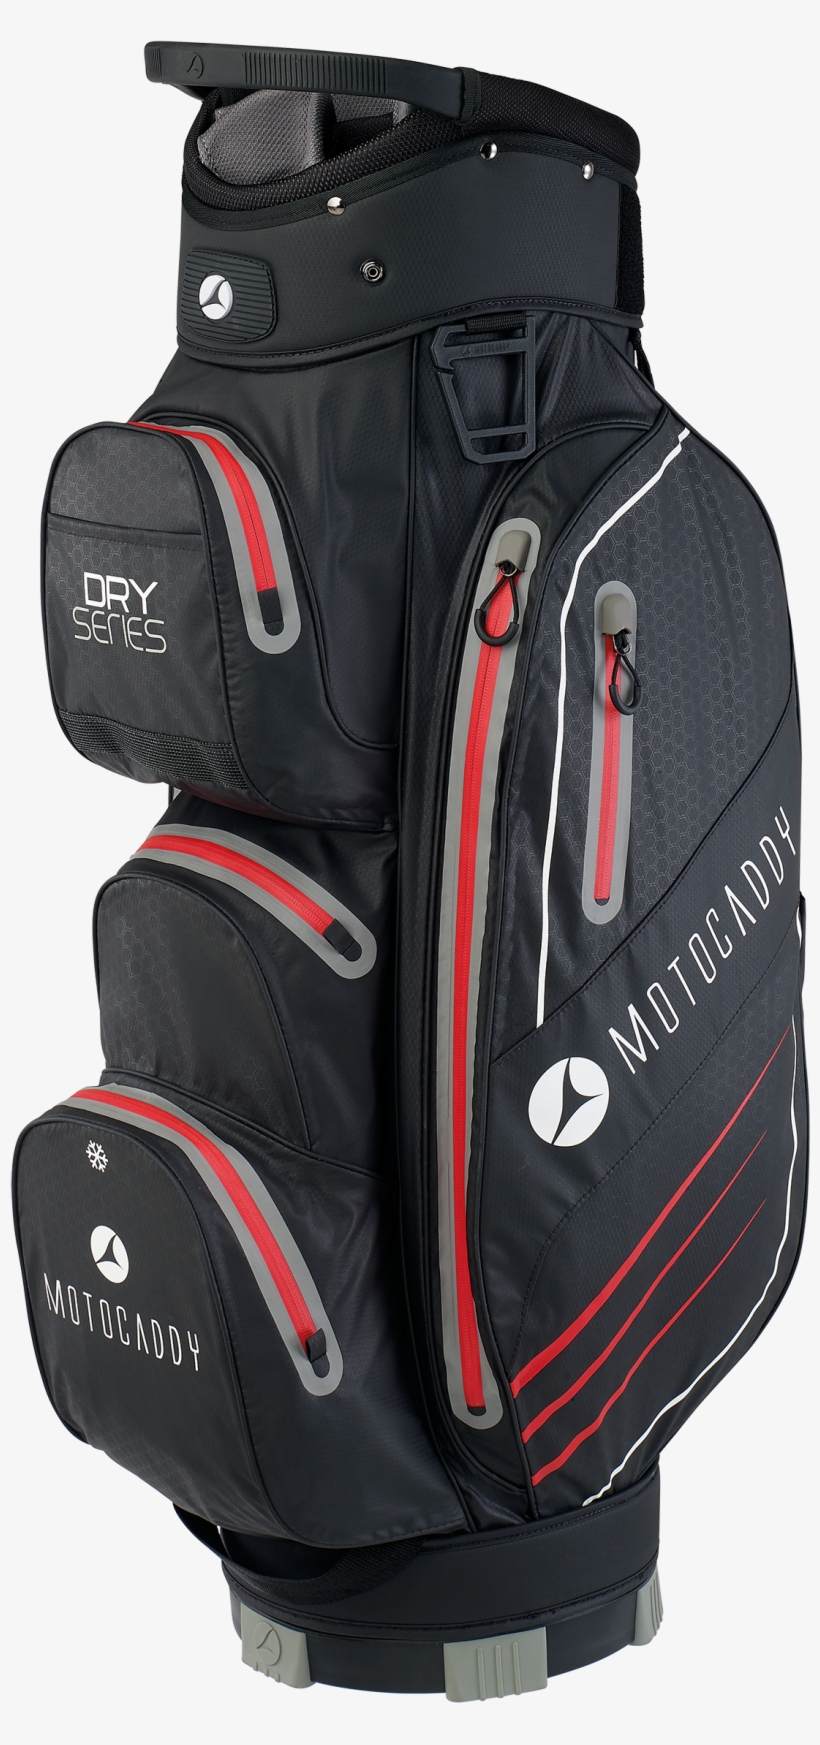 Dry-series Golf Bag - Motocaddy Dry Series Cart Bag 2017, transparent png #7632826